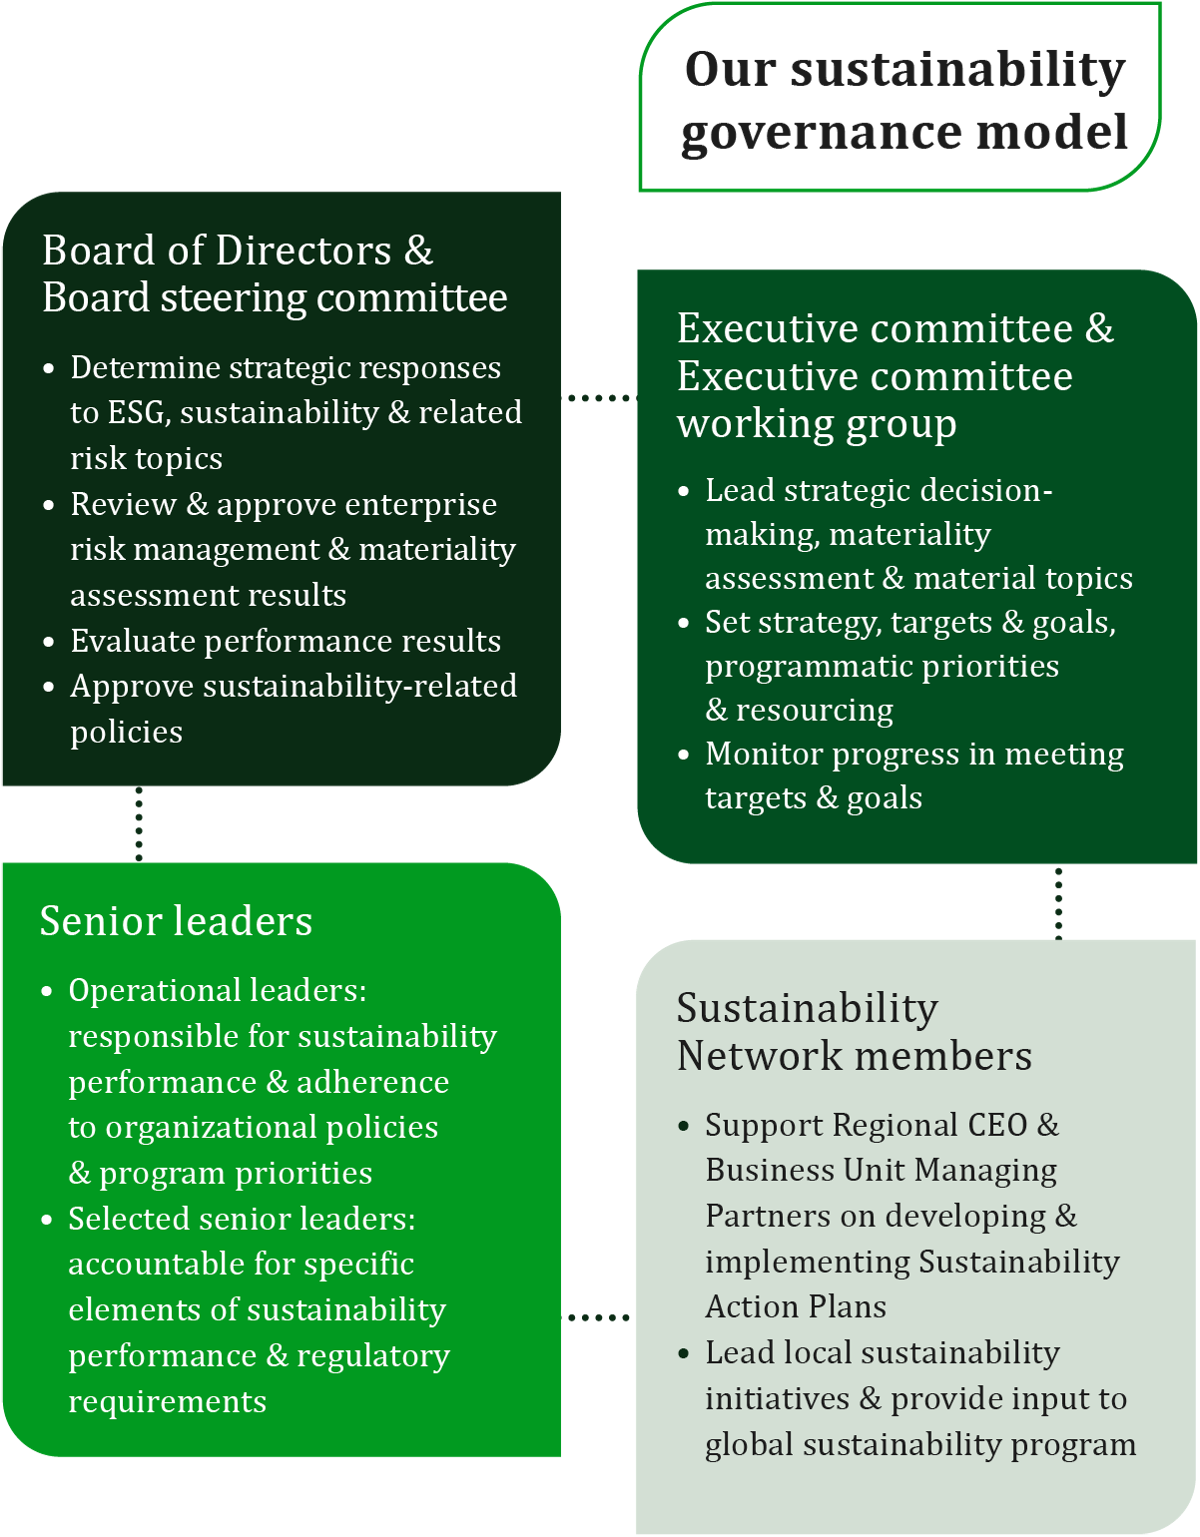 Sustainability-governance.jpg